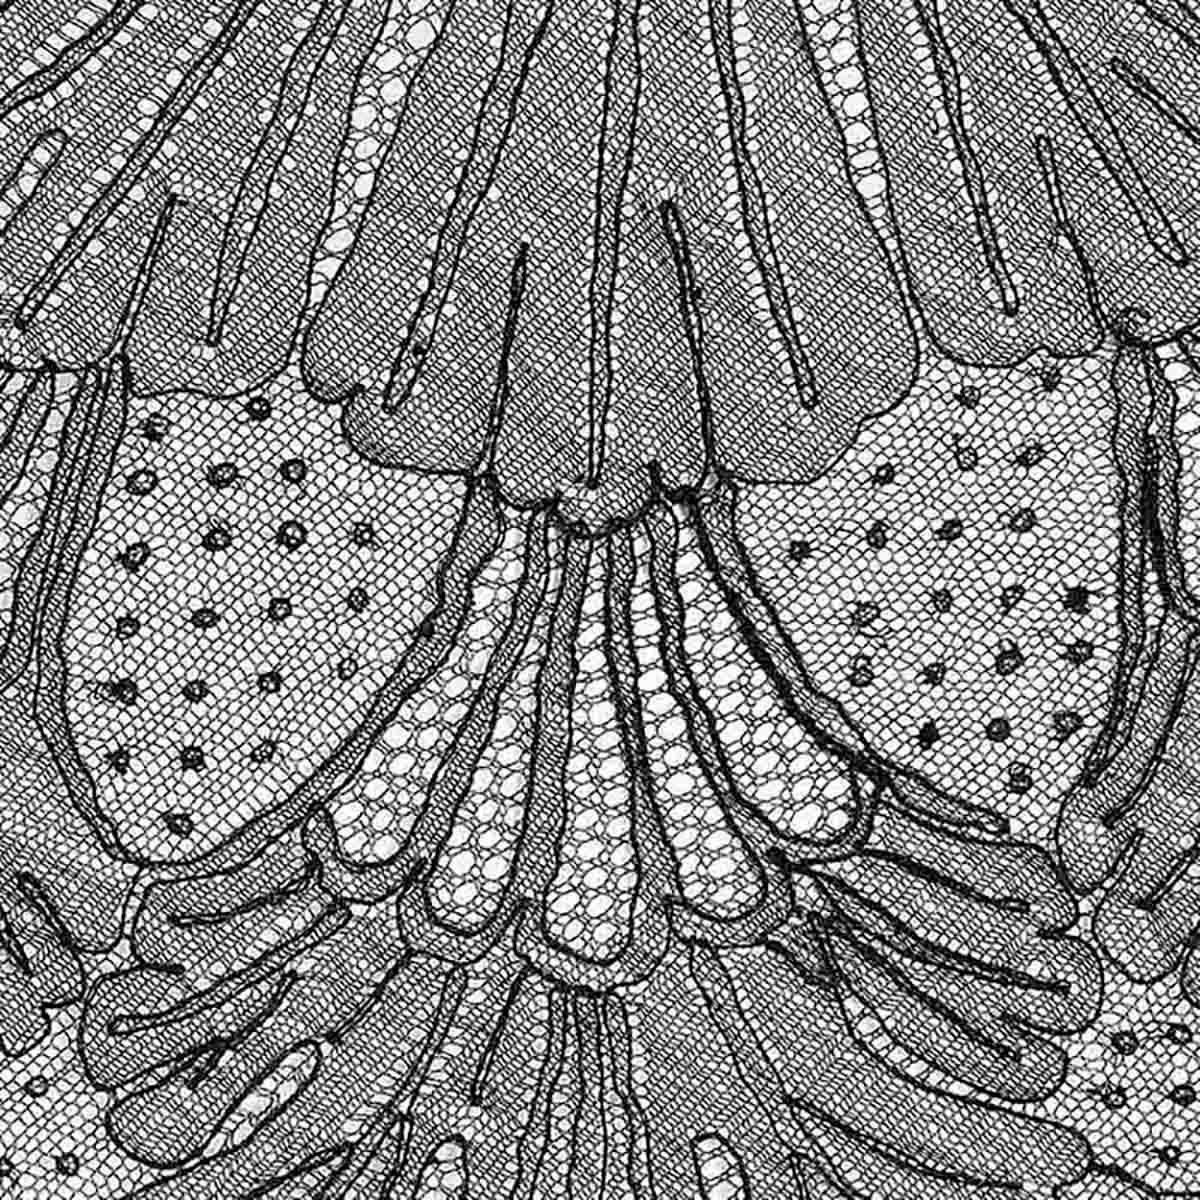 Product details: 1920s Vintage Tea Dress - Black Floral Lace - V-Neck Detail Front + Back - Side Split Detail - 3/4 Length Sleeves + Black Silk Hem Piping
Label: Unknown 
Fabric Content: Black - Floral Lace Dress / Hand Made
Condition: Great